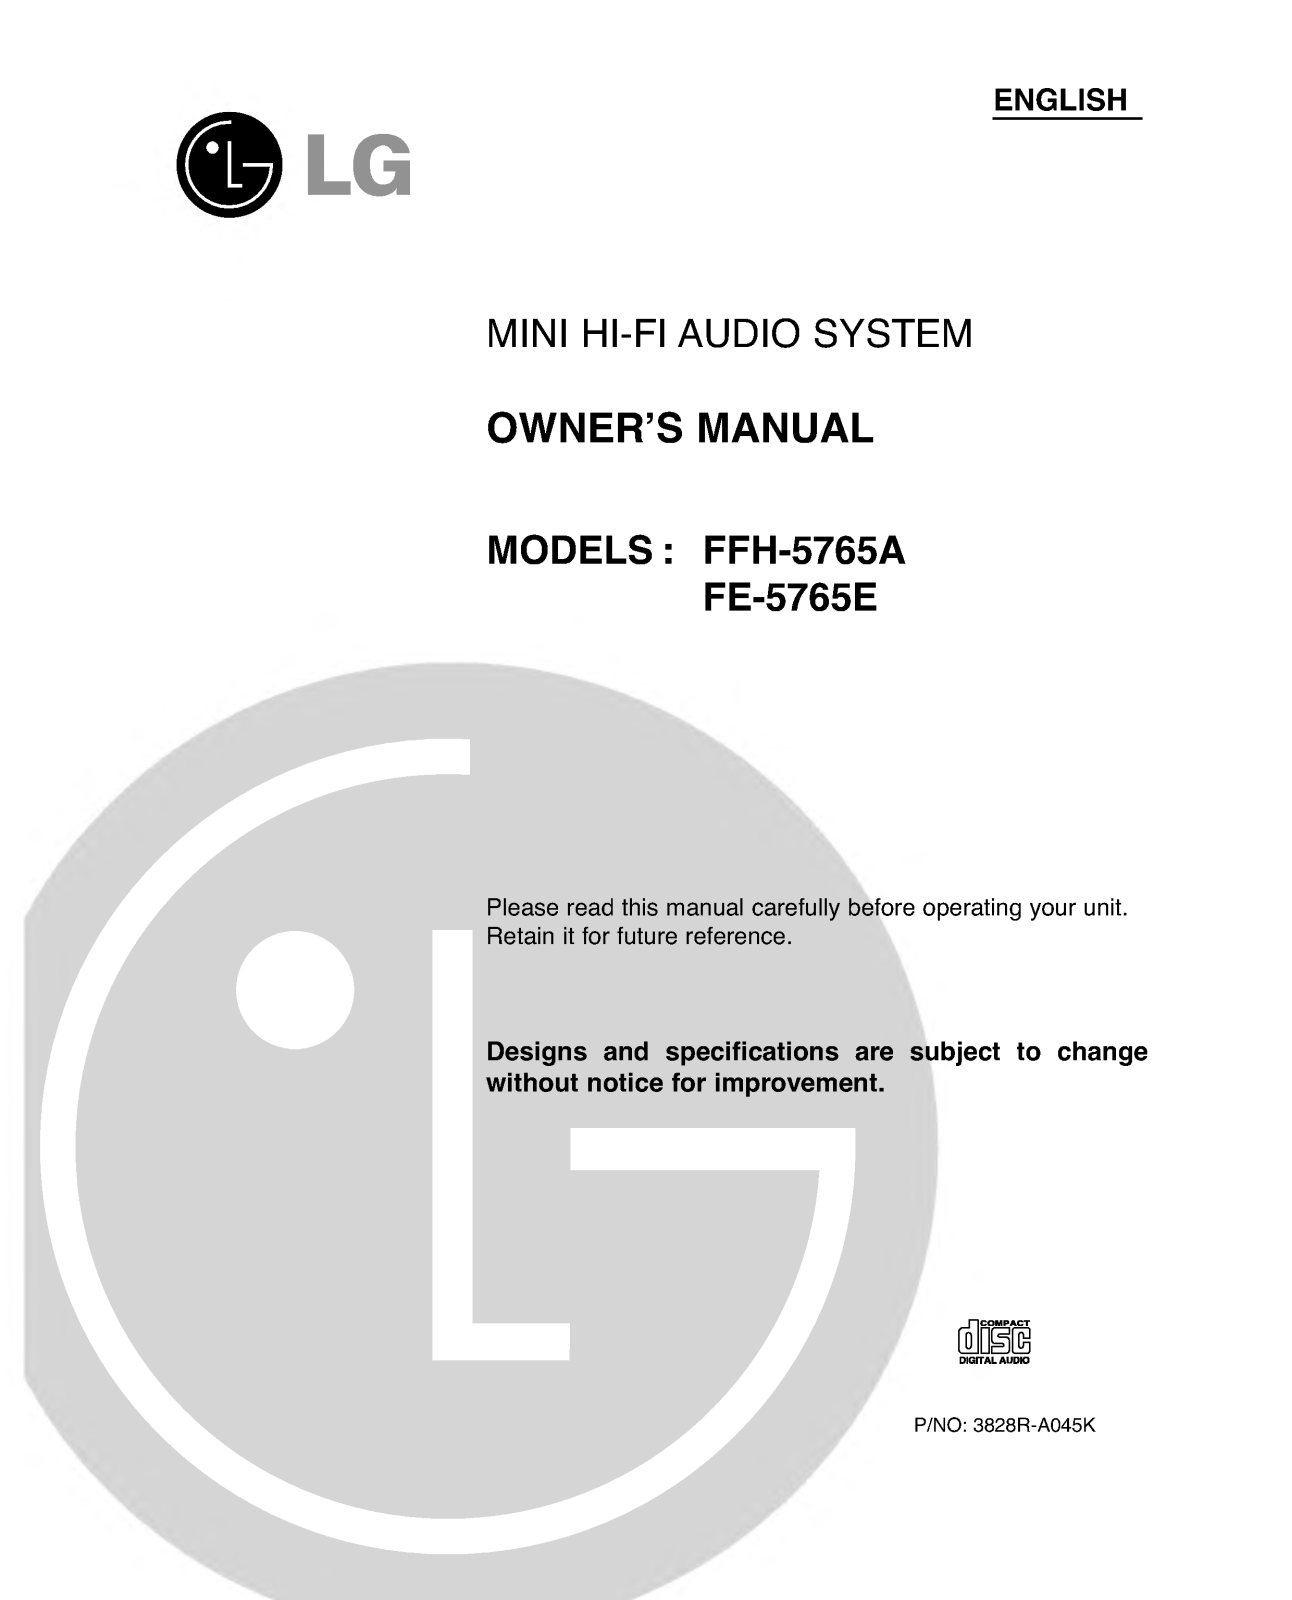 LG FFH-5765A User Manual